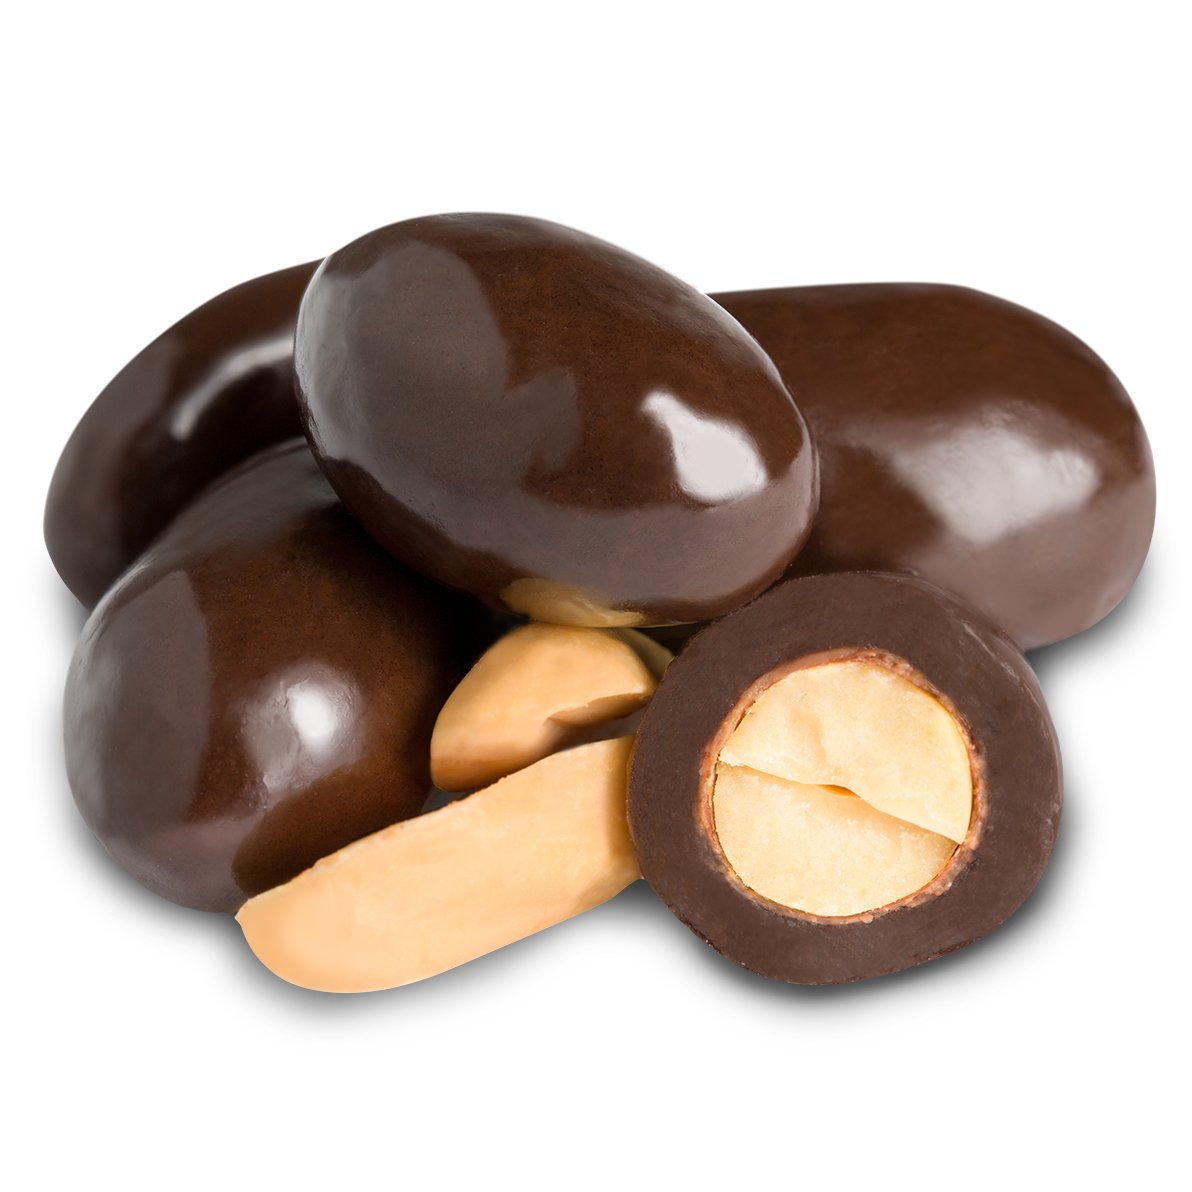 Sugar Free Dark Chocolate Almonds - 2 lbs.